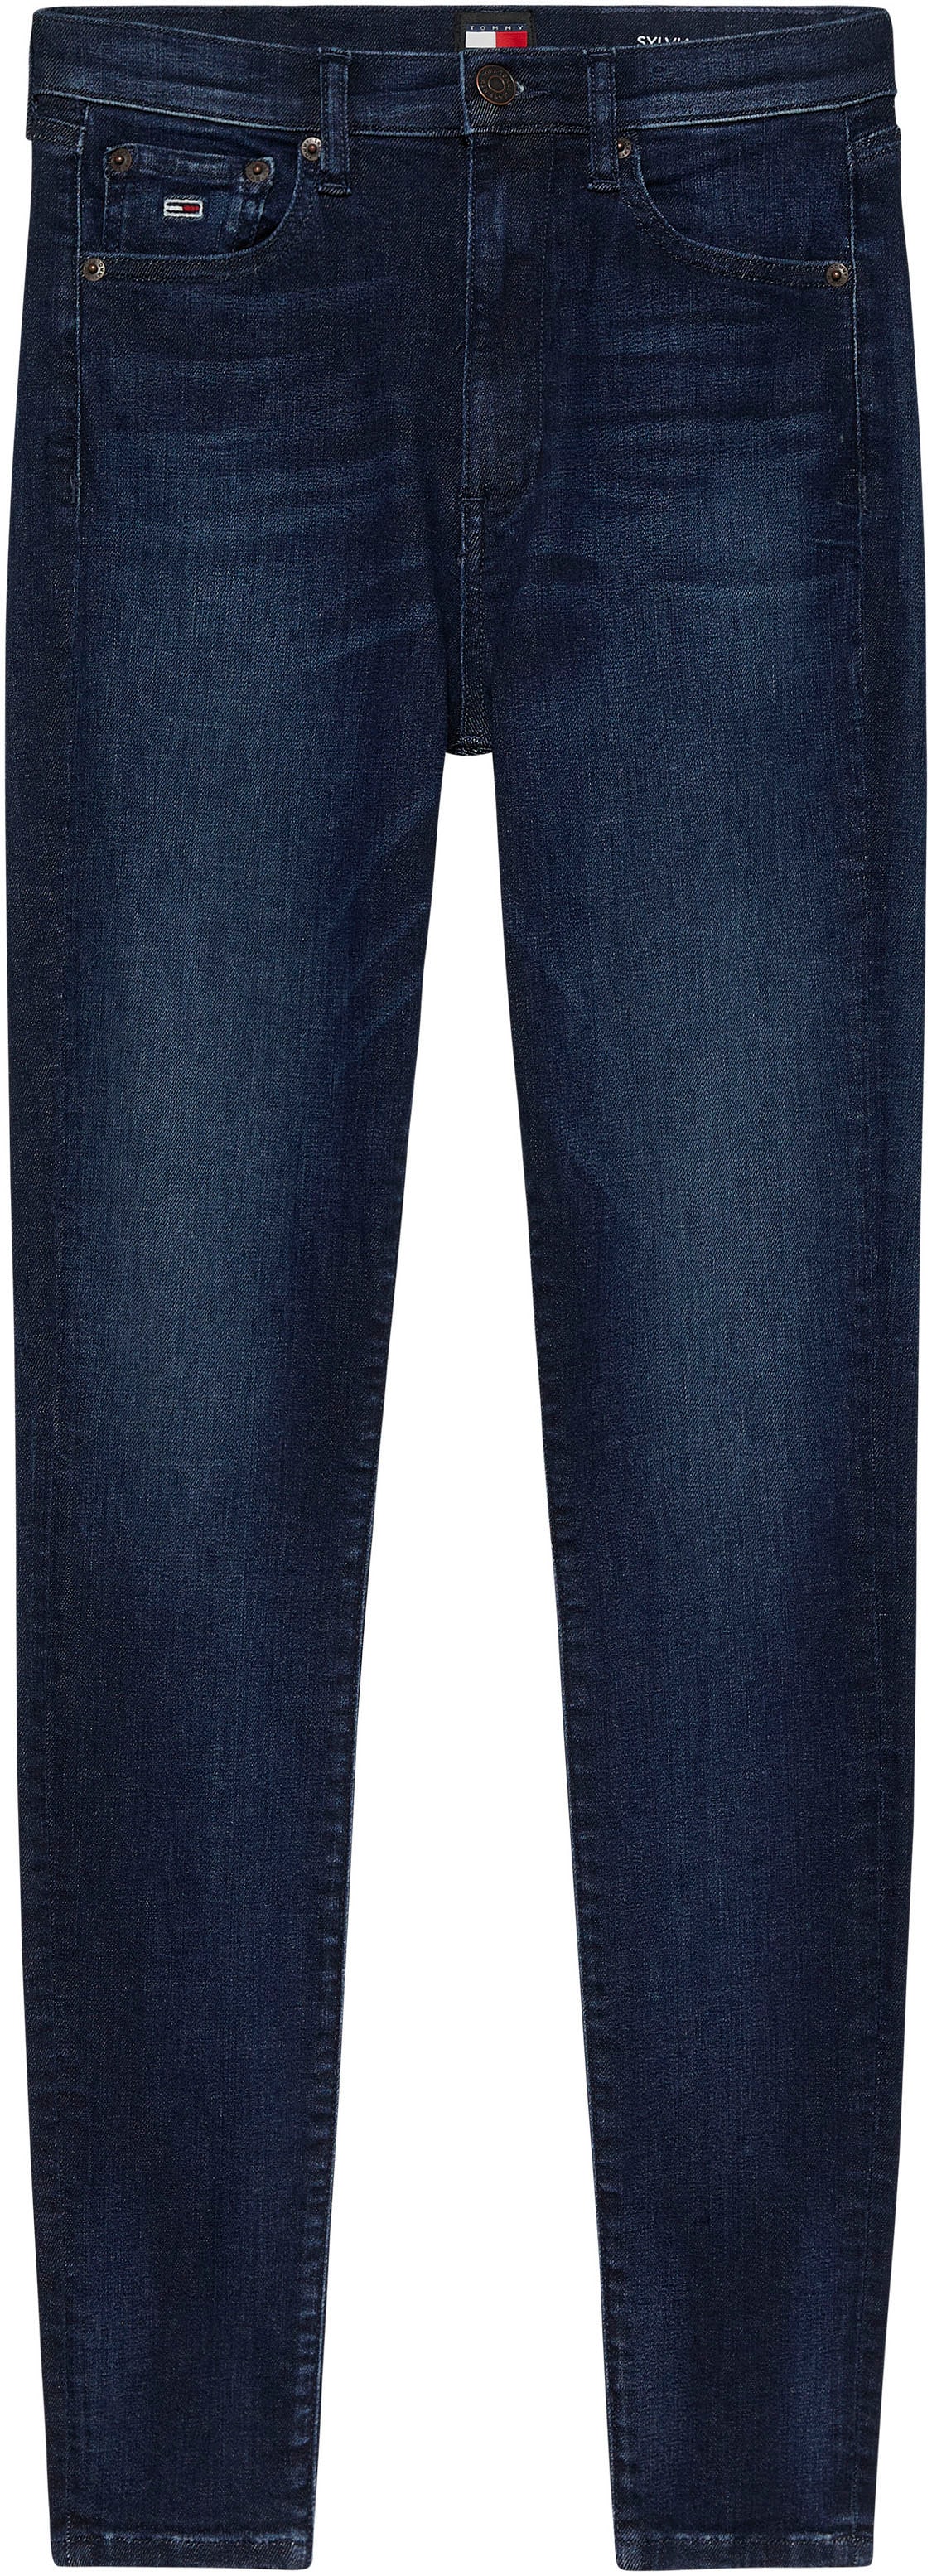 Tommy Jeans Bequeme »Sylvia«, Jeans Ledermarkenlabel mit kaufen